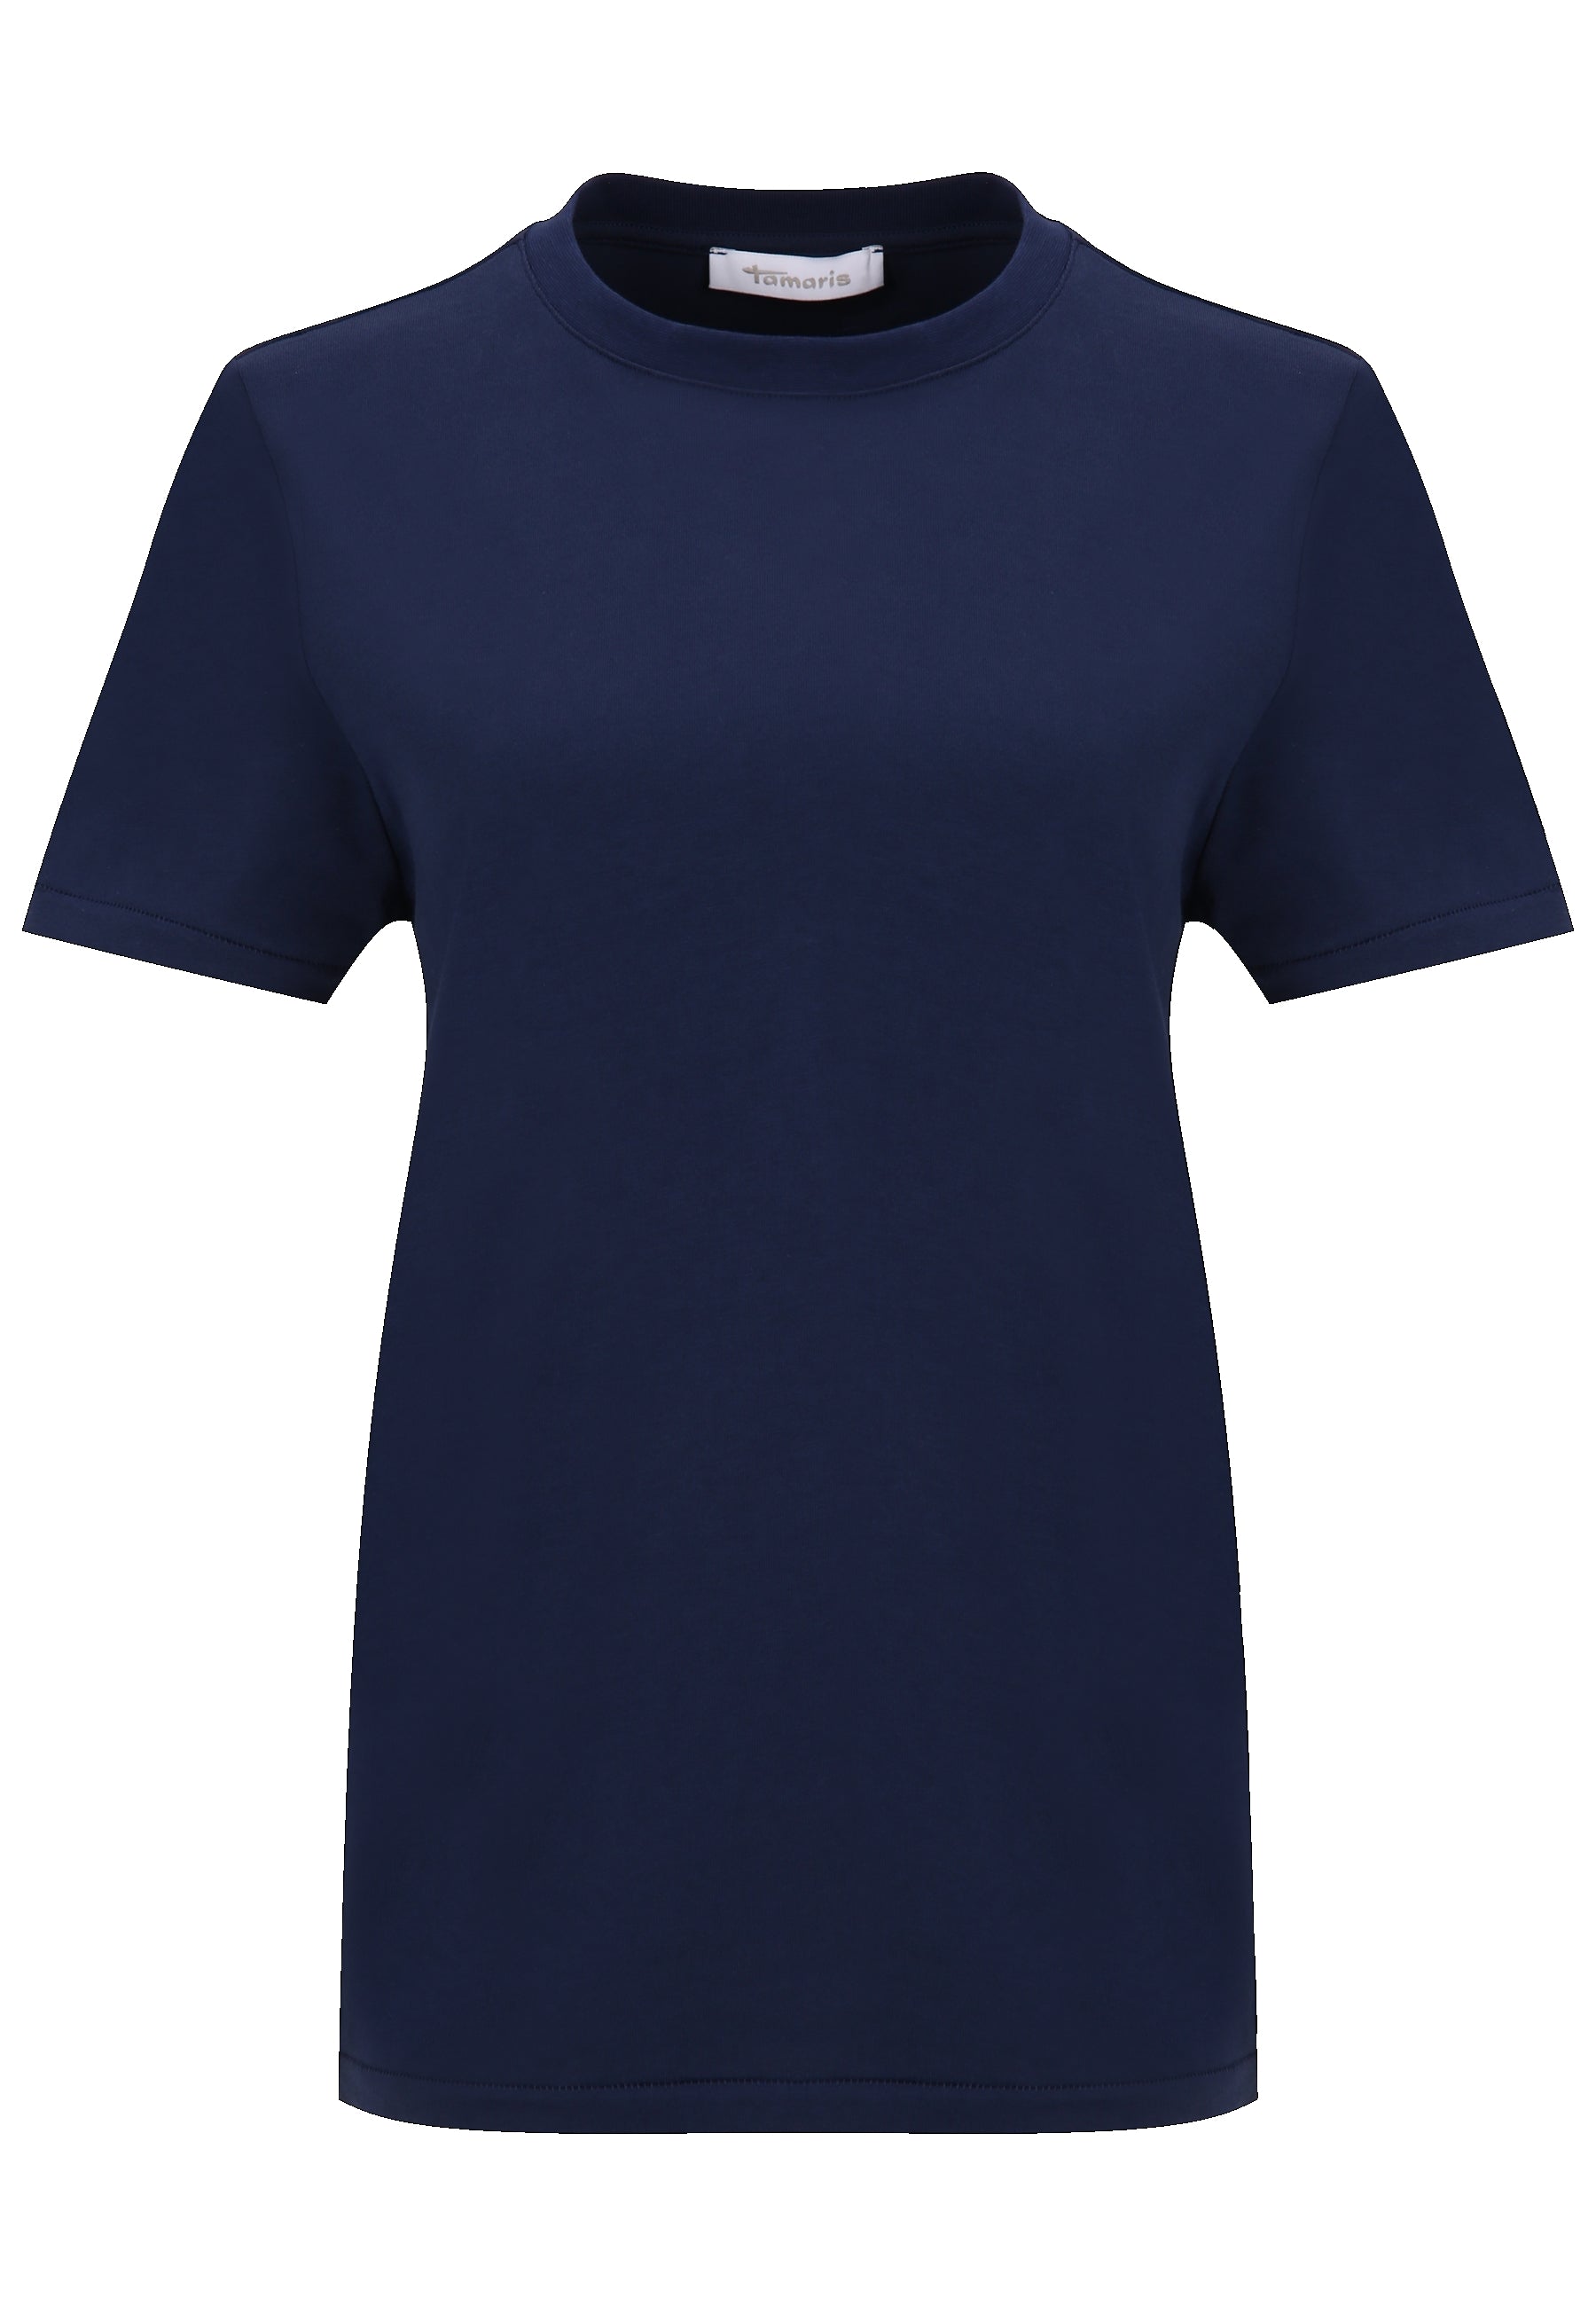 Adria Round Neck Plain Tee in Medieval Blue T-Shirts Tamaris   